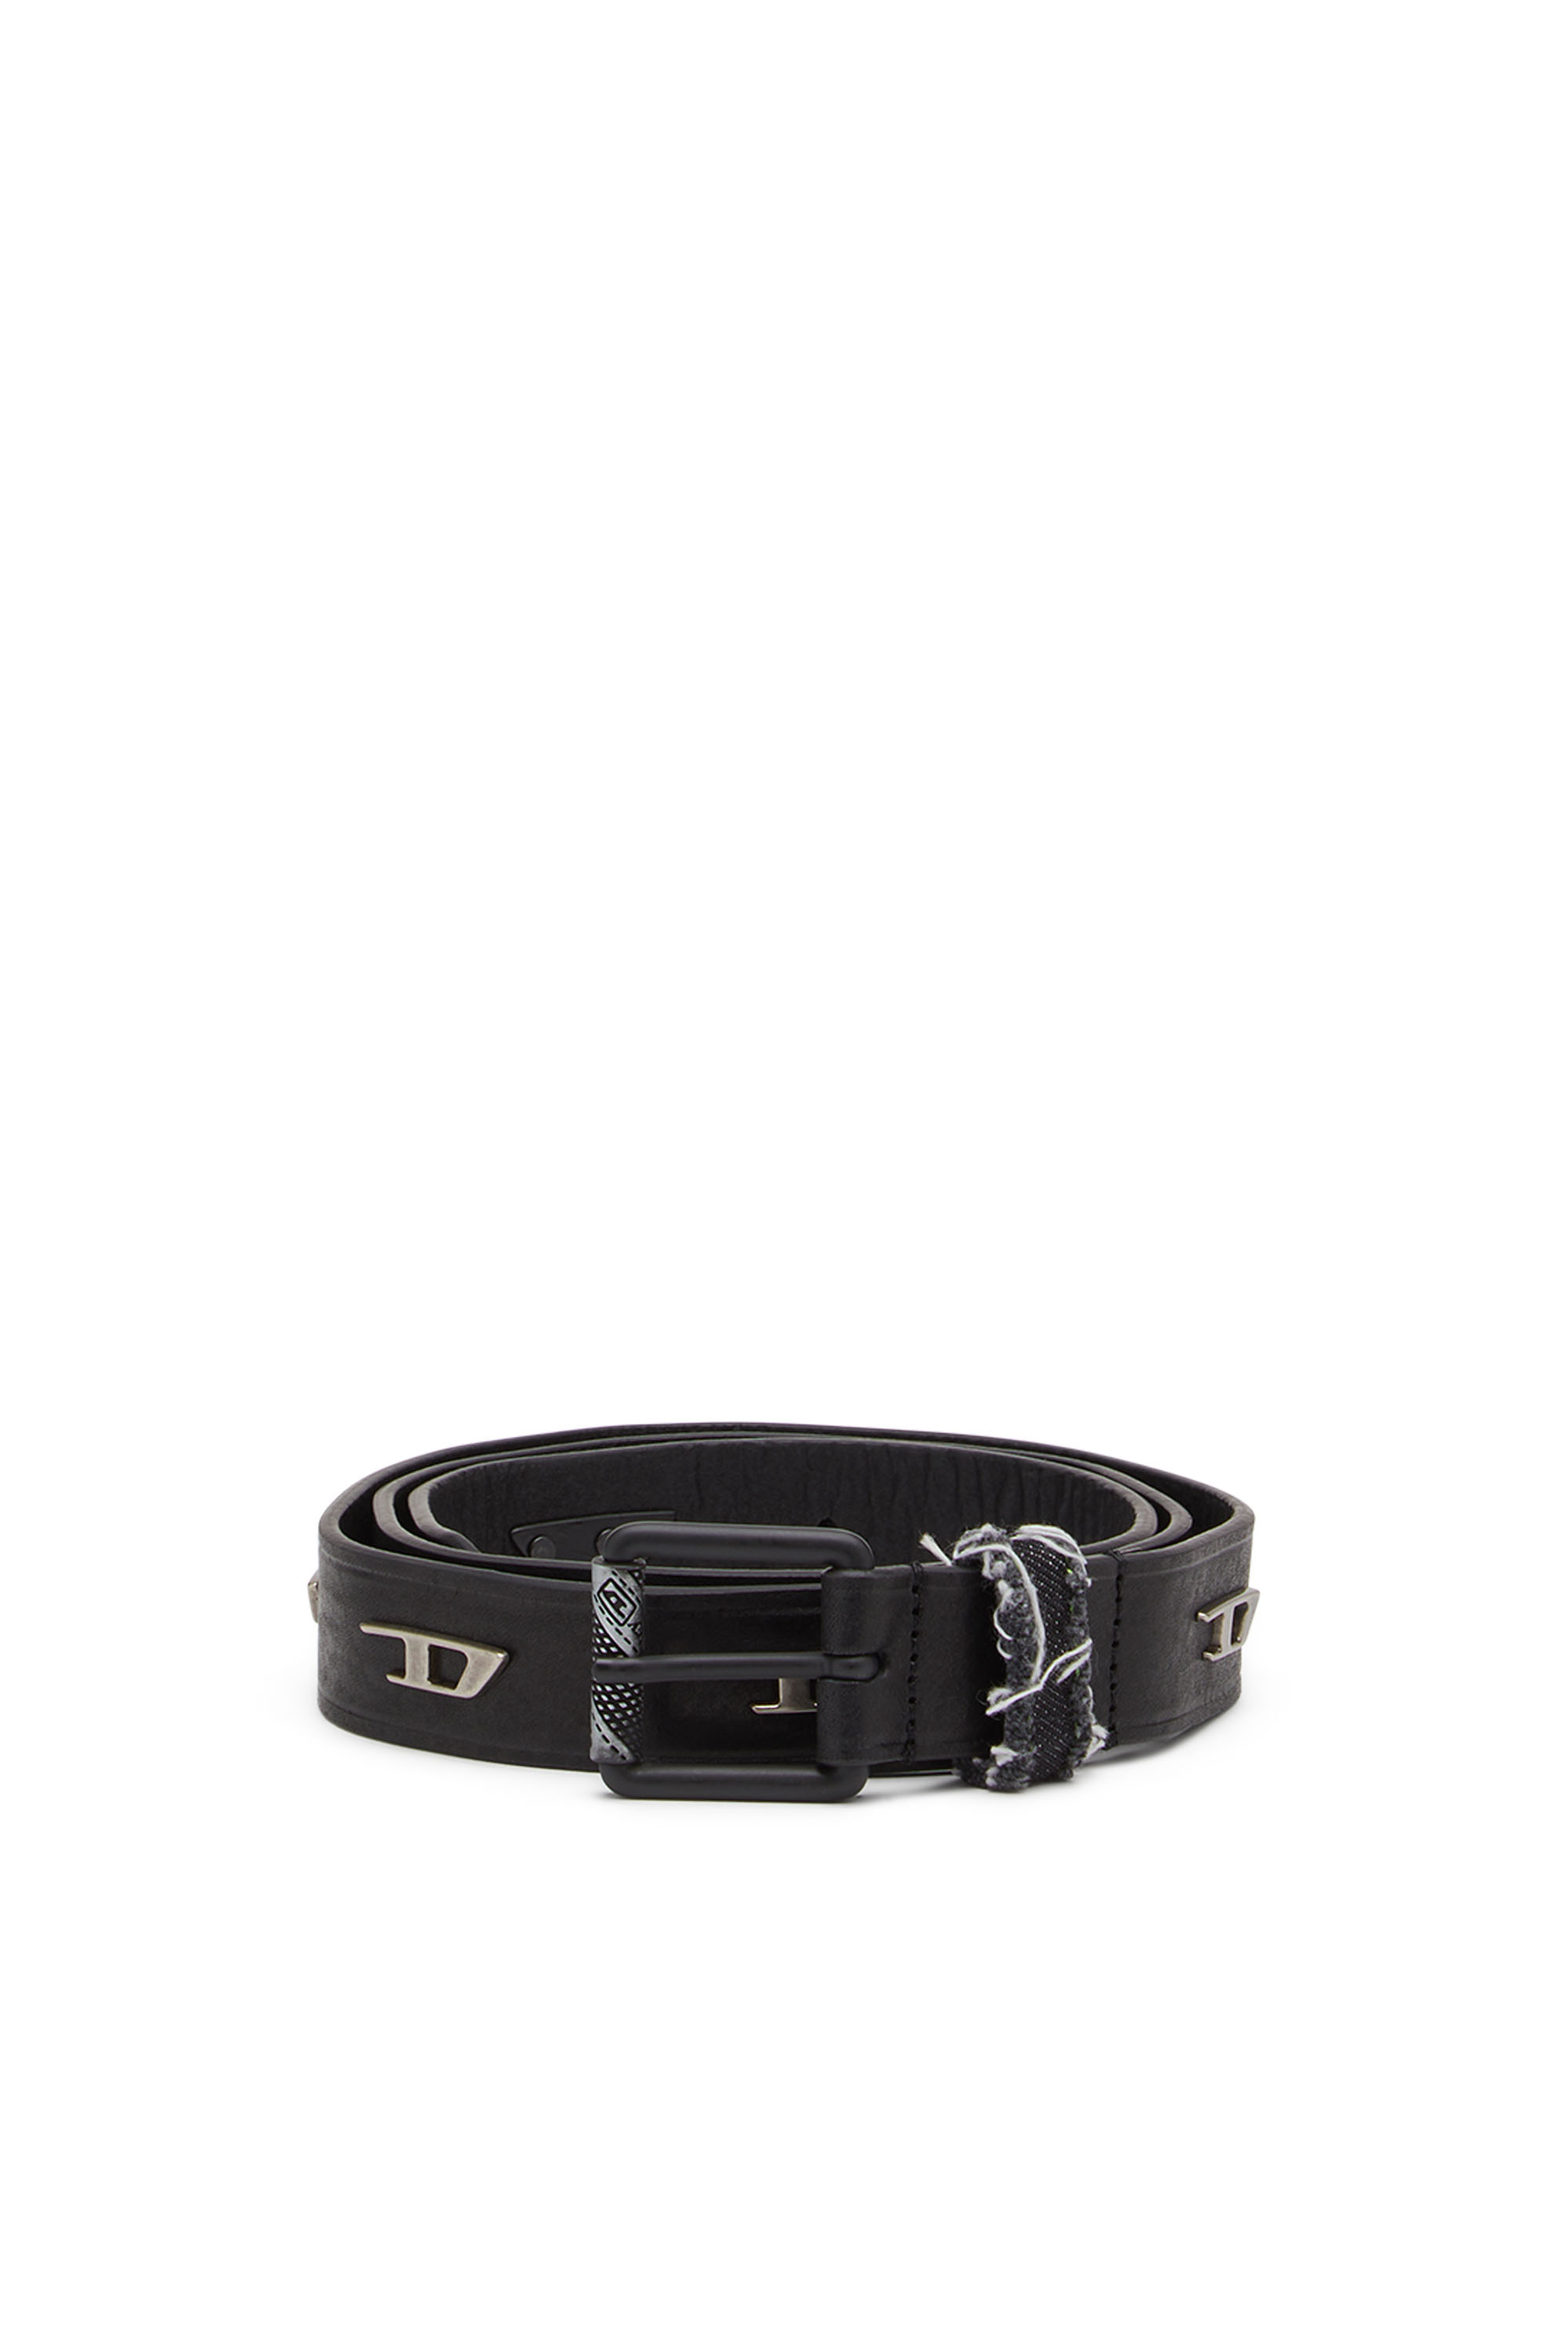 Mens Belts DIESEL Belts for Men White DIESEL Leather Belt in Black 